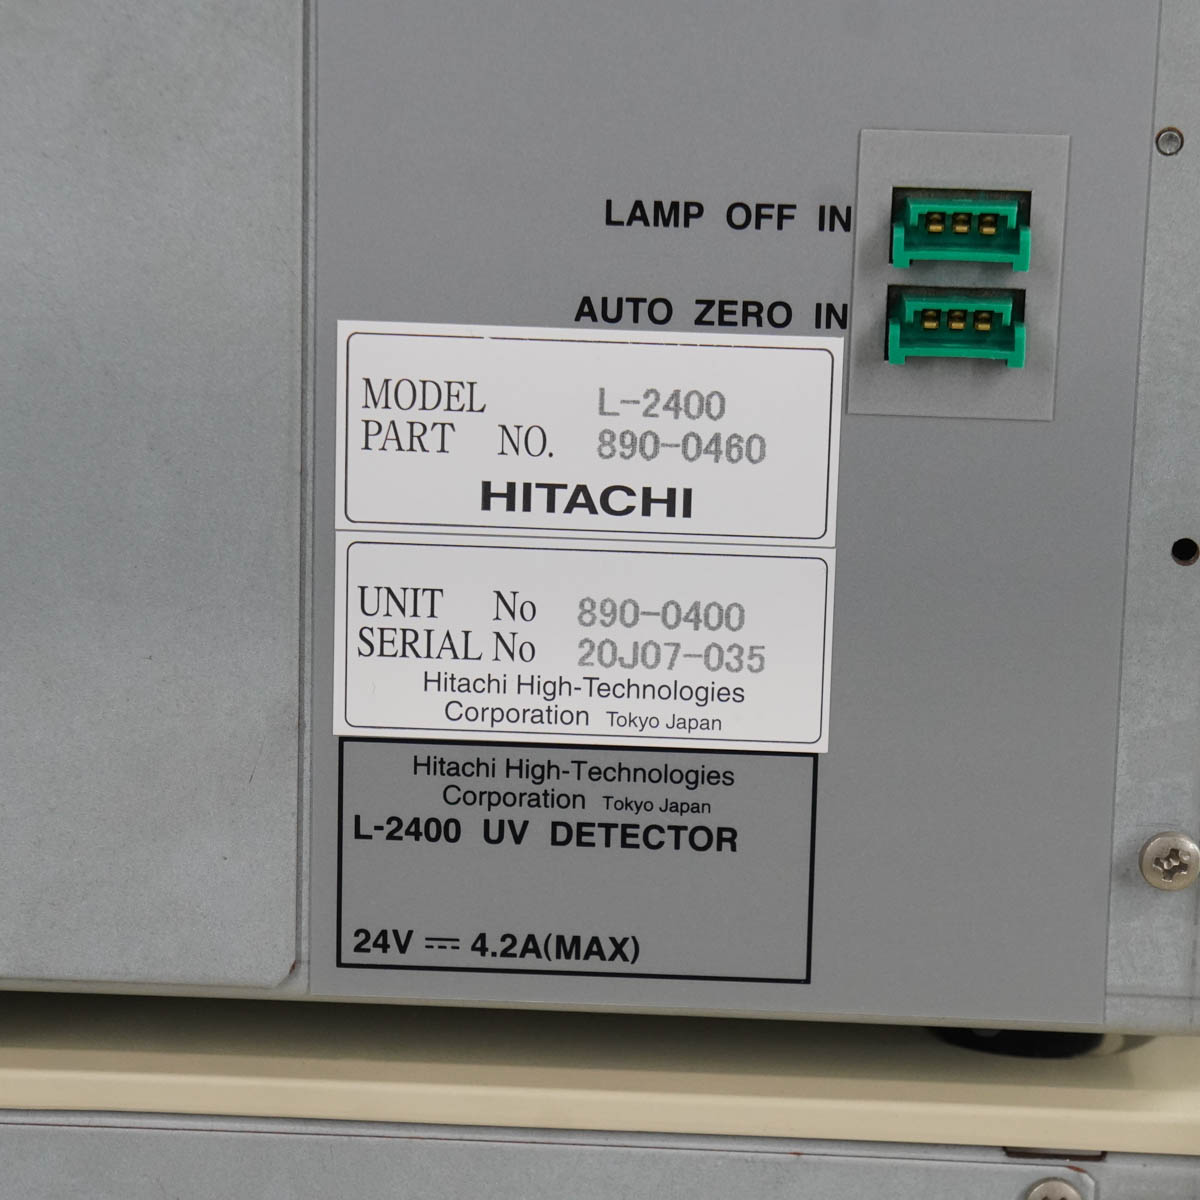 [DW]USED 8日保証 セット HITACHI L-2400 L-2130 L-2200 L-2300 Organizer HPLC ELITE LaChrom UV Detector Pump Autosampl...[04643-0011] - 18